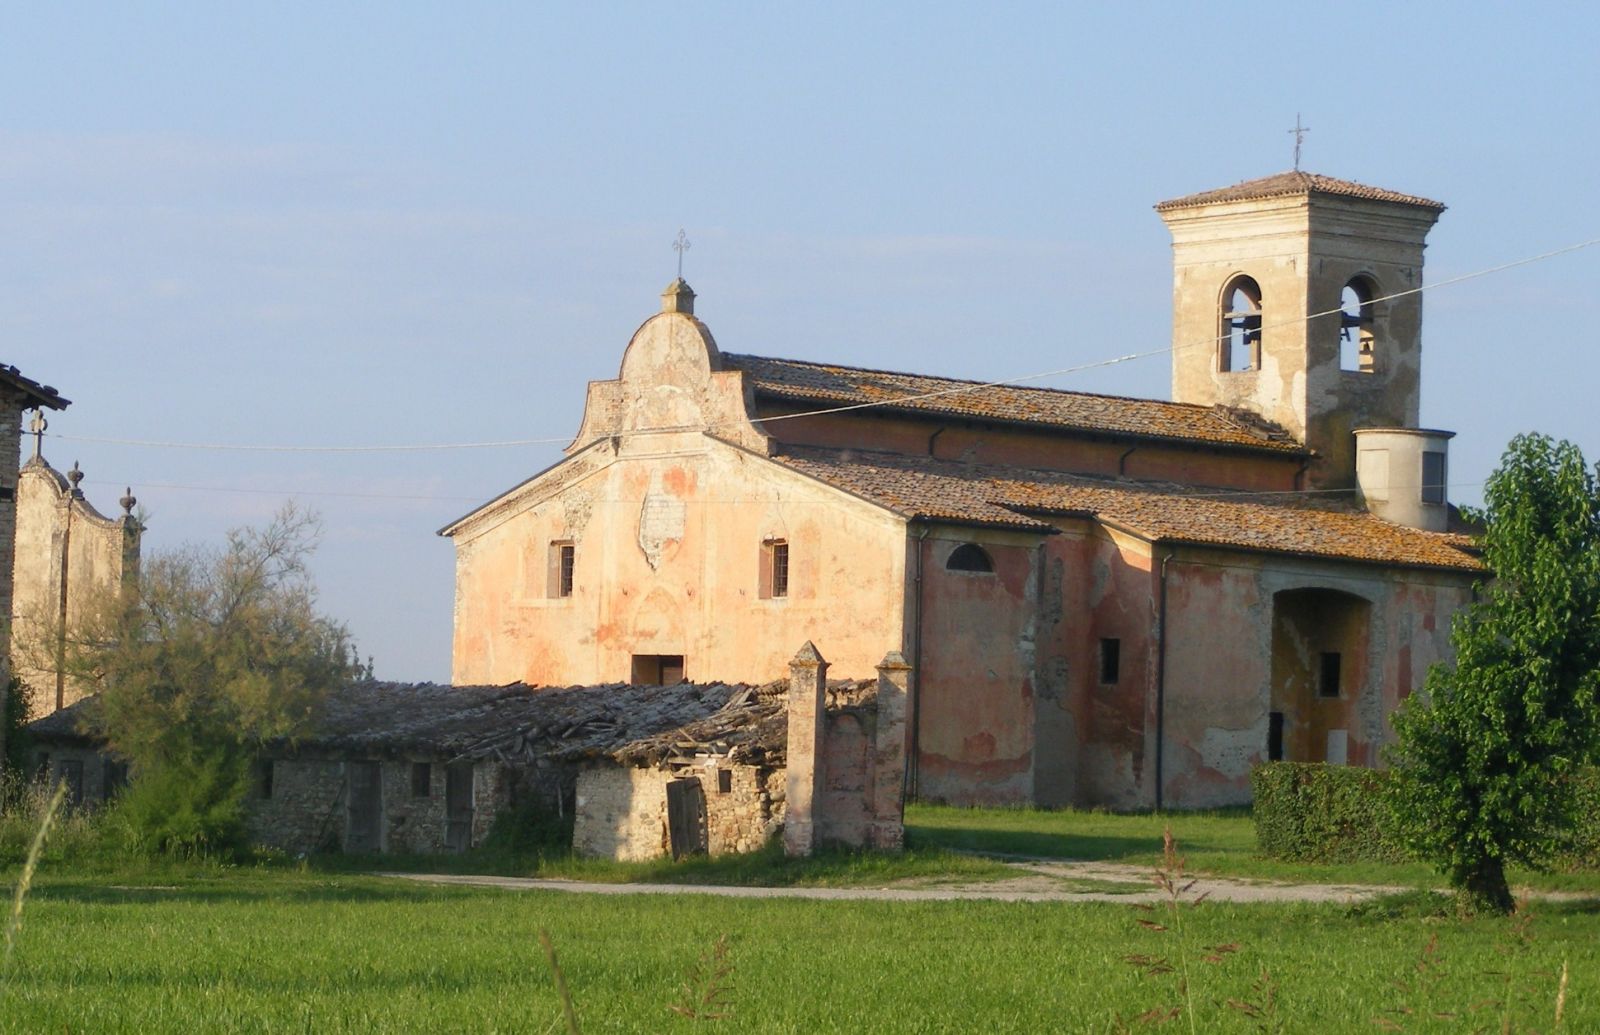 Pieve di S. Pietro e Paolo a Caviano (S. Polo d'Enza - Re)